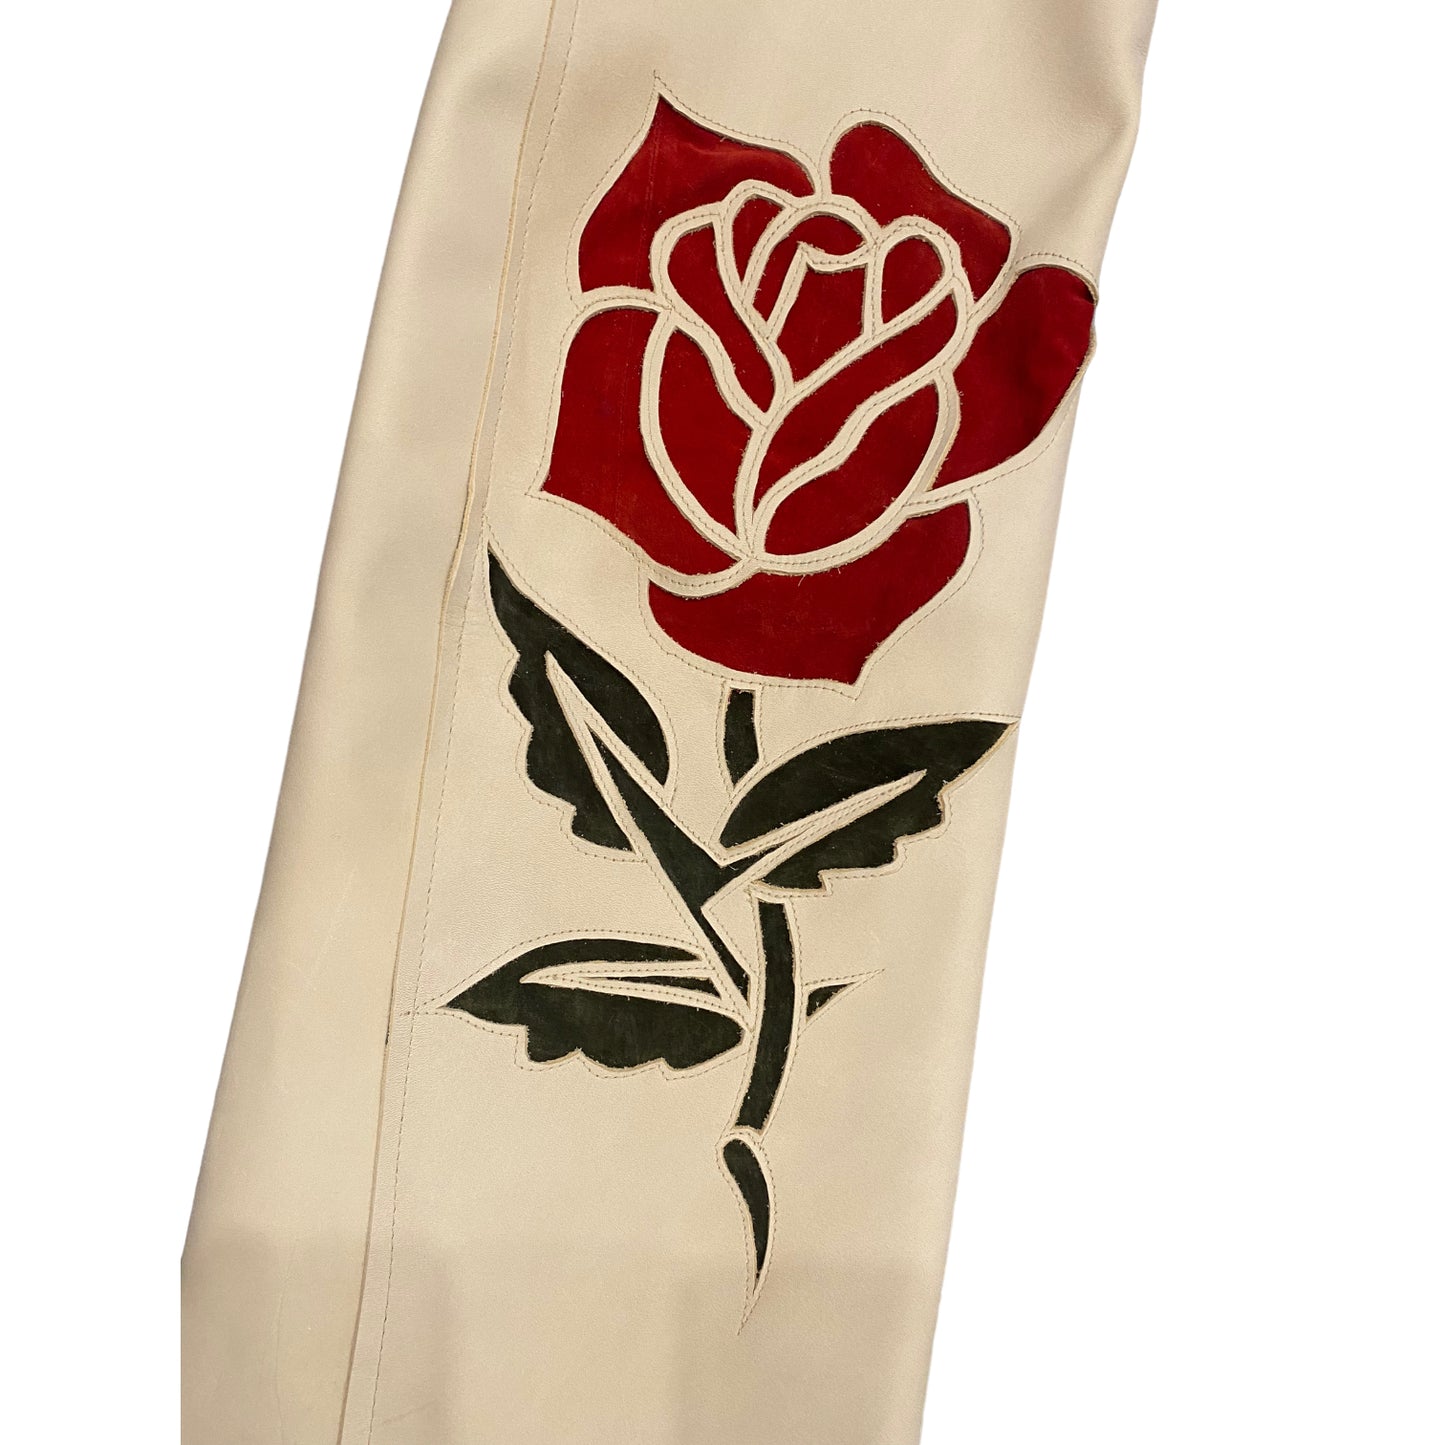 Handmade Leather Rose Chaps by Dan McLean